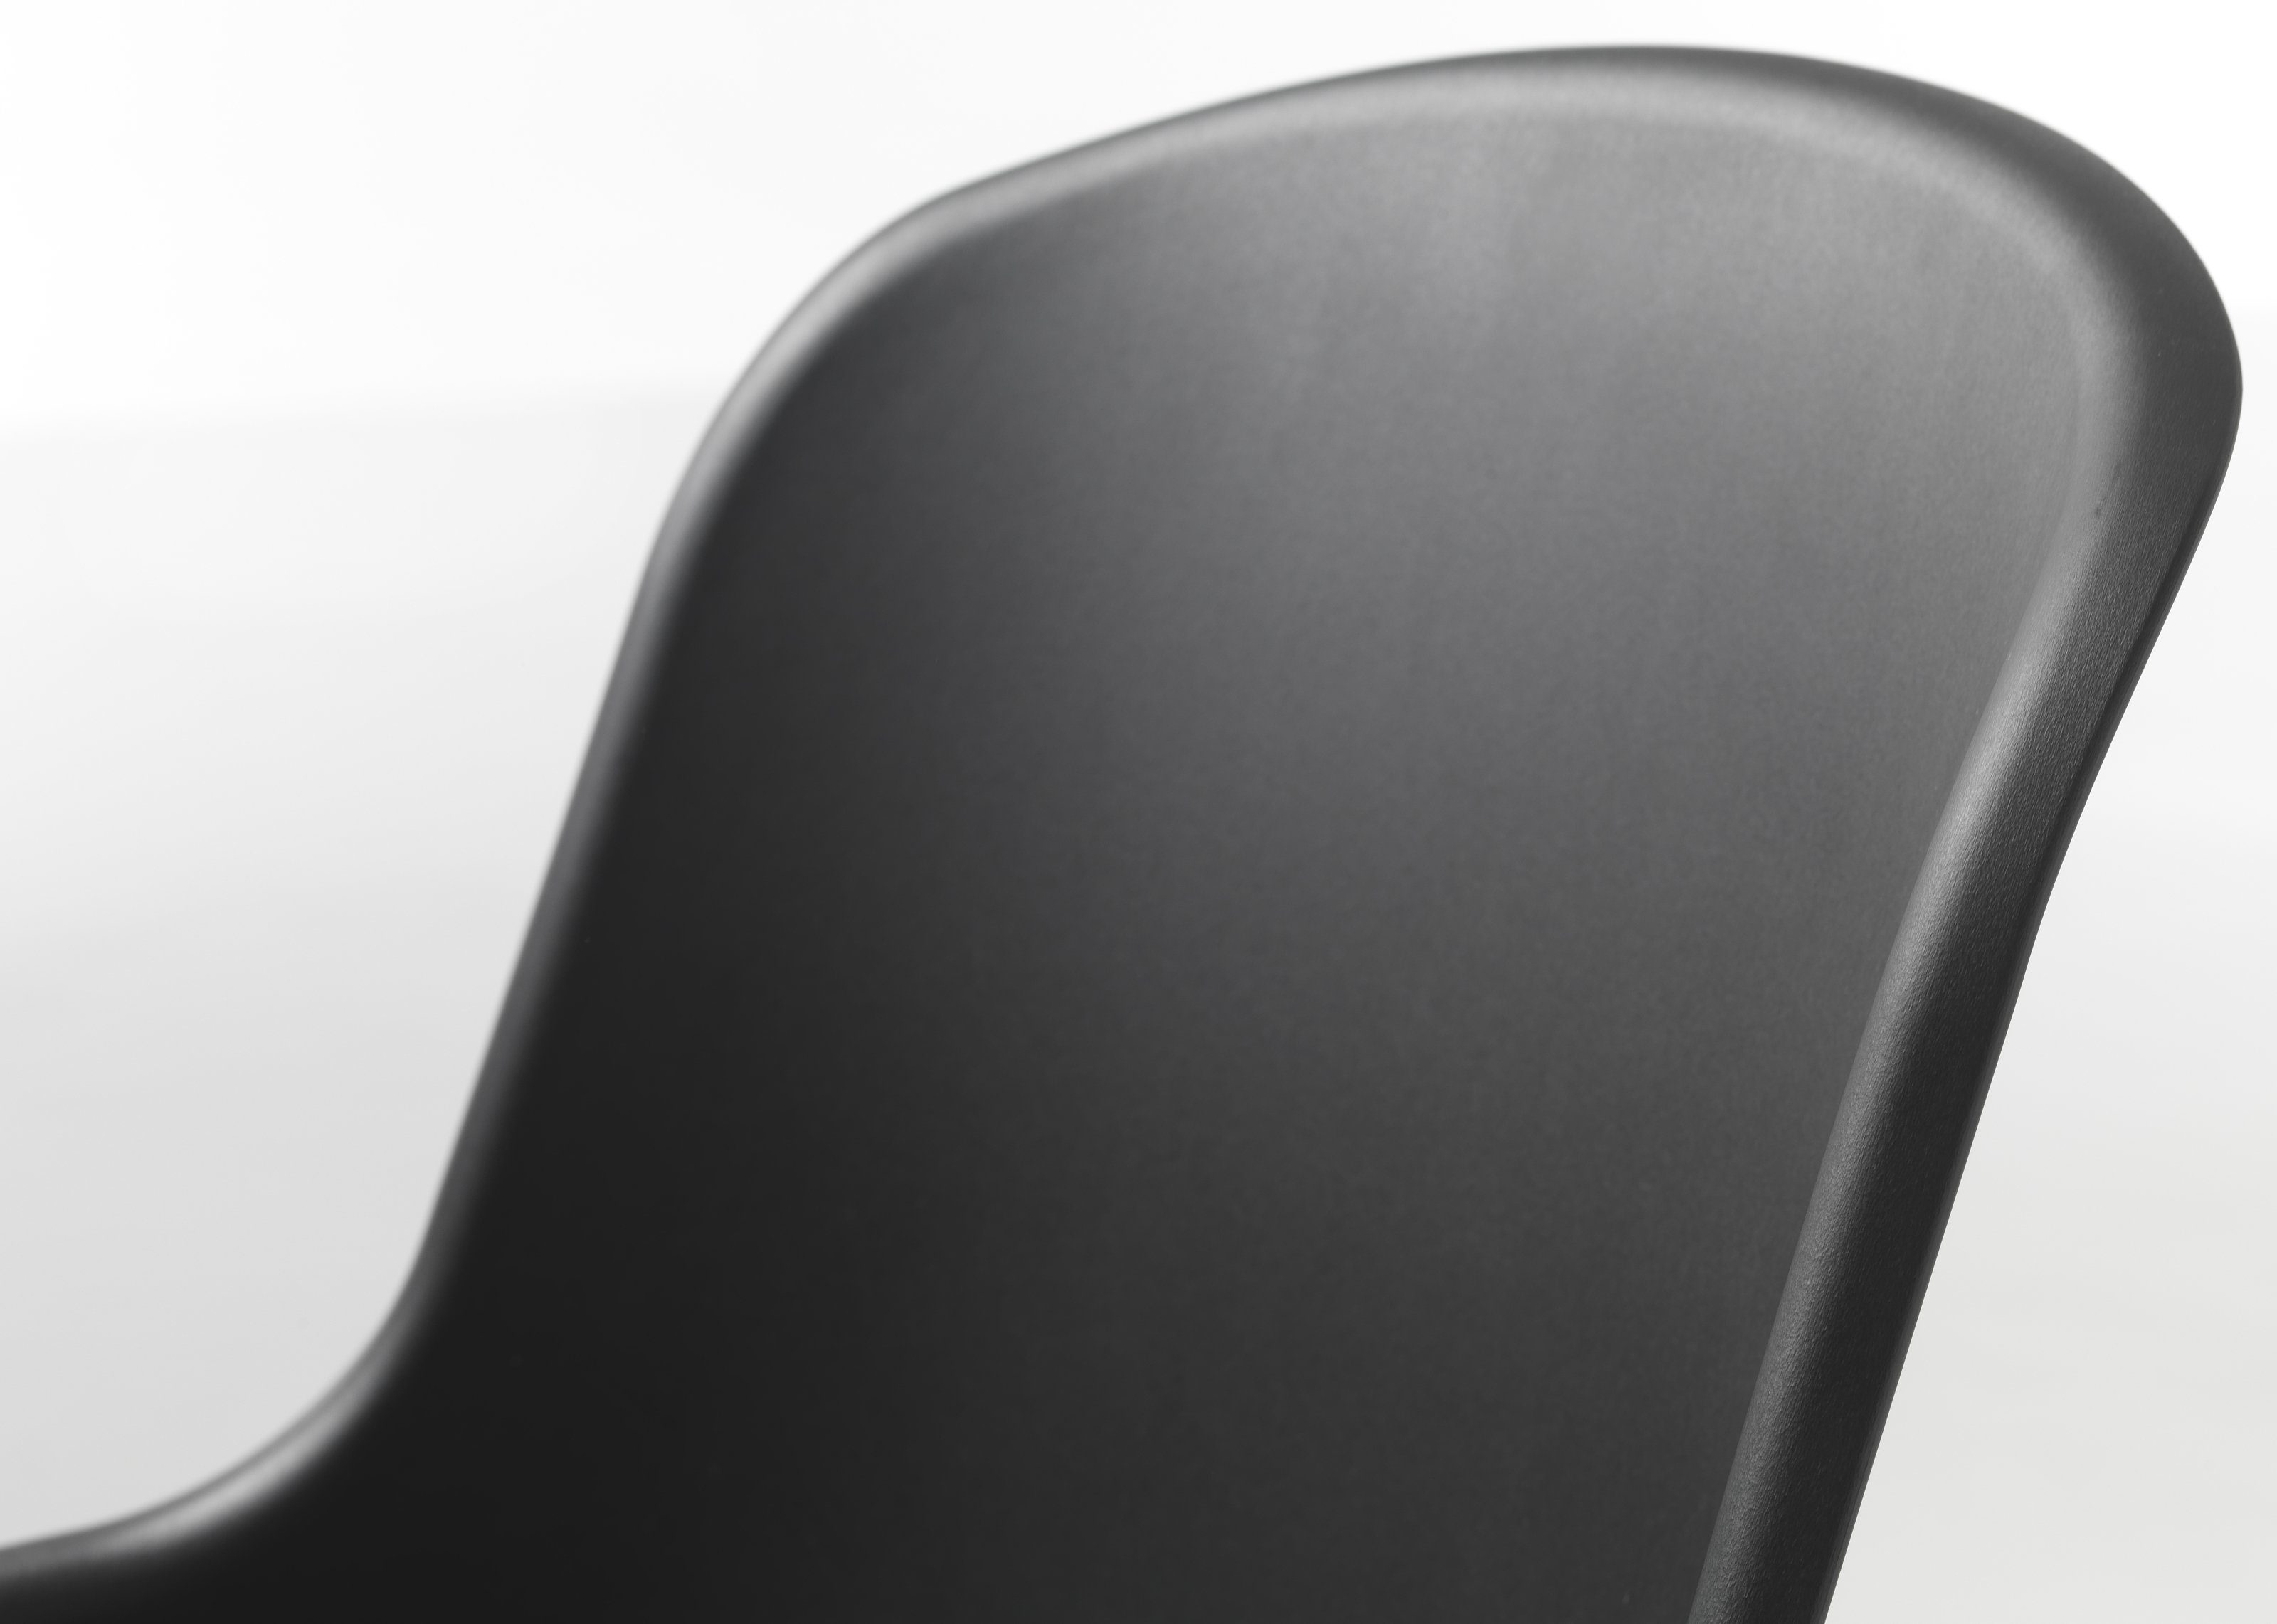 aus (2er-Set), TOPLEY Stuhl möbelando Metall/Kunststoff in schwarz